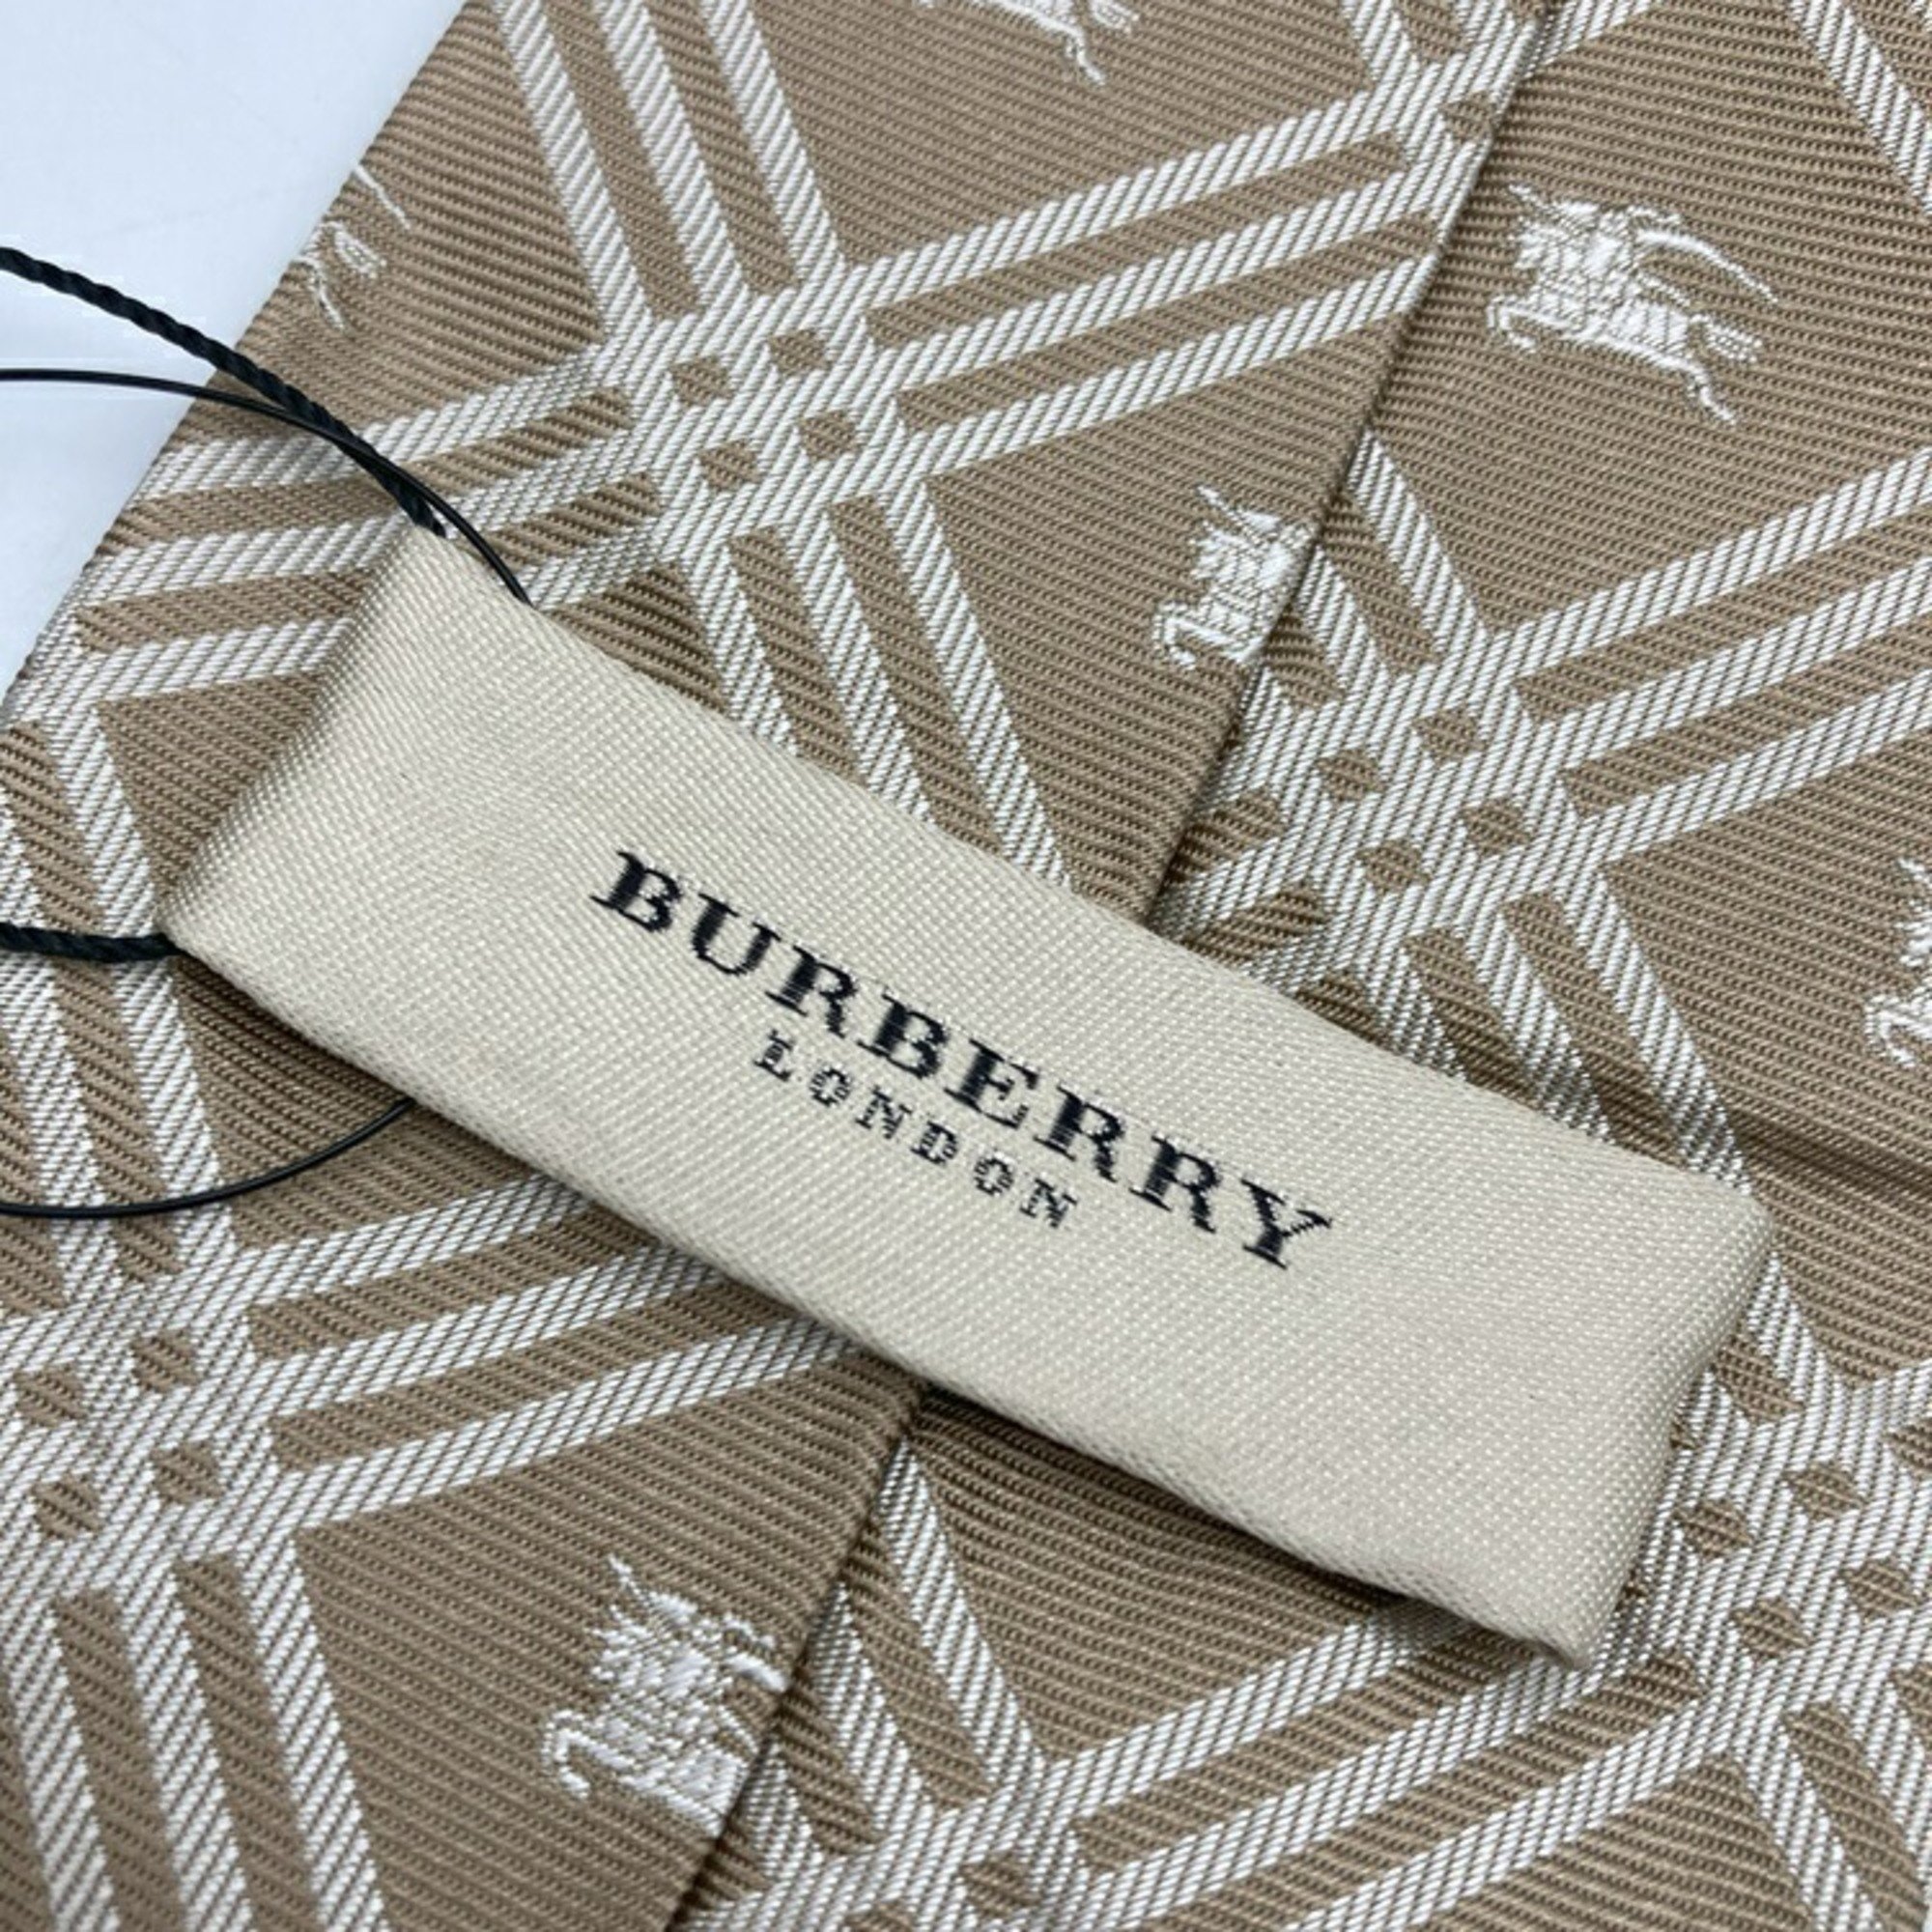 BURBERRY LONDON Burberry London Tie Plaid Horse Mark 100% Silk